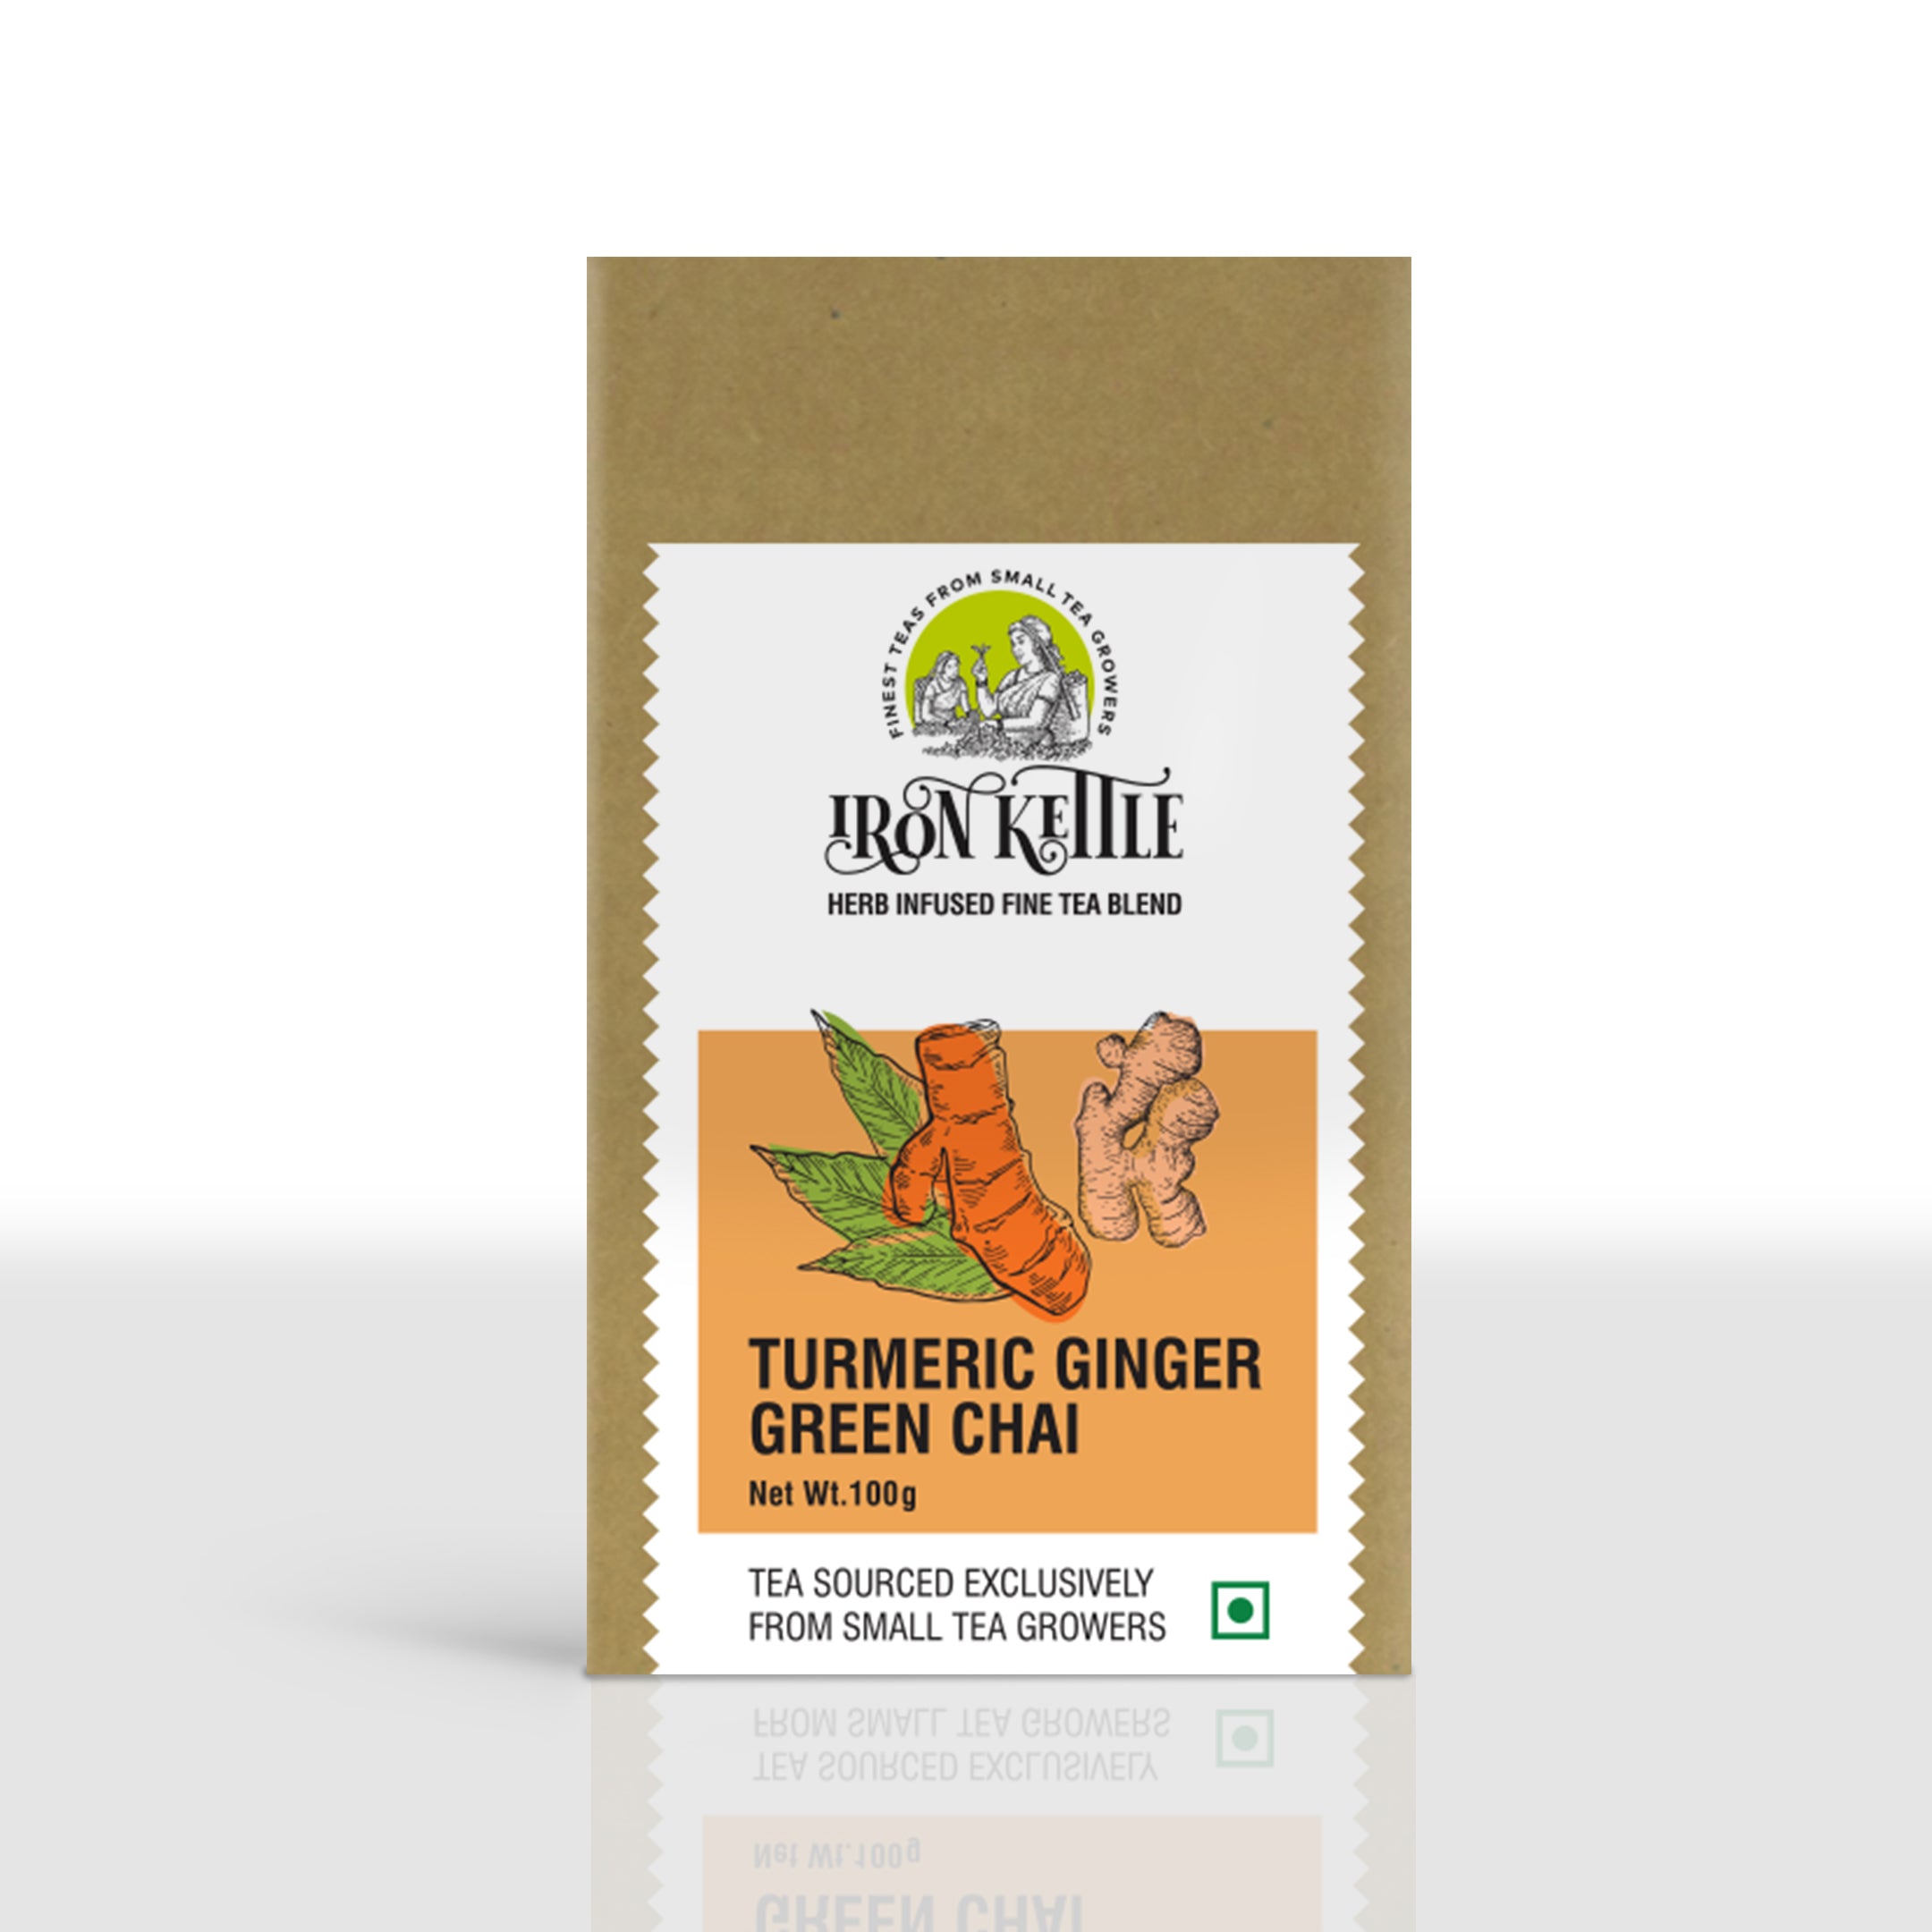 Turmeric Ginger Green Chai - Iron Kettle Tea